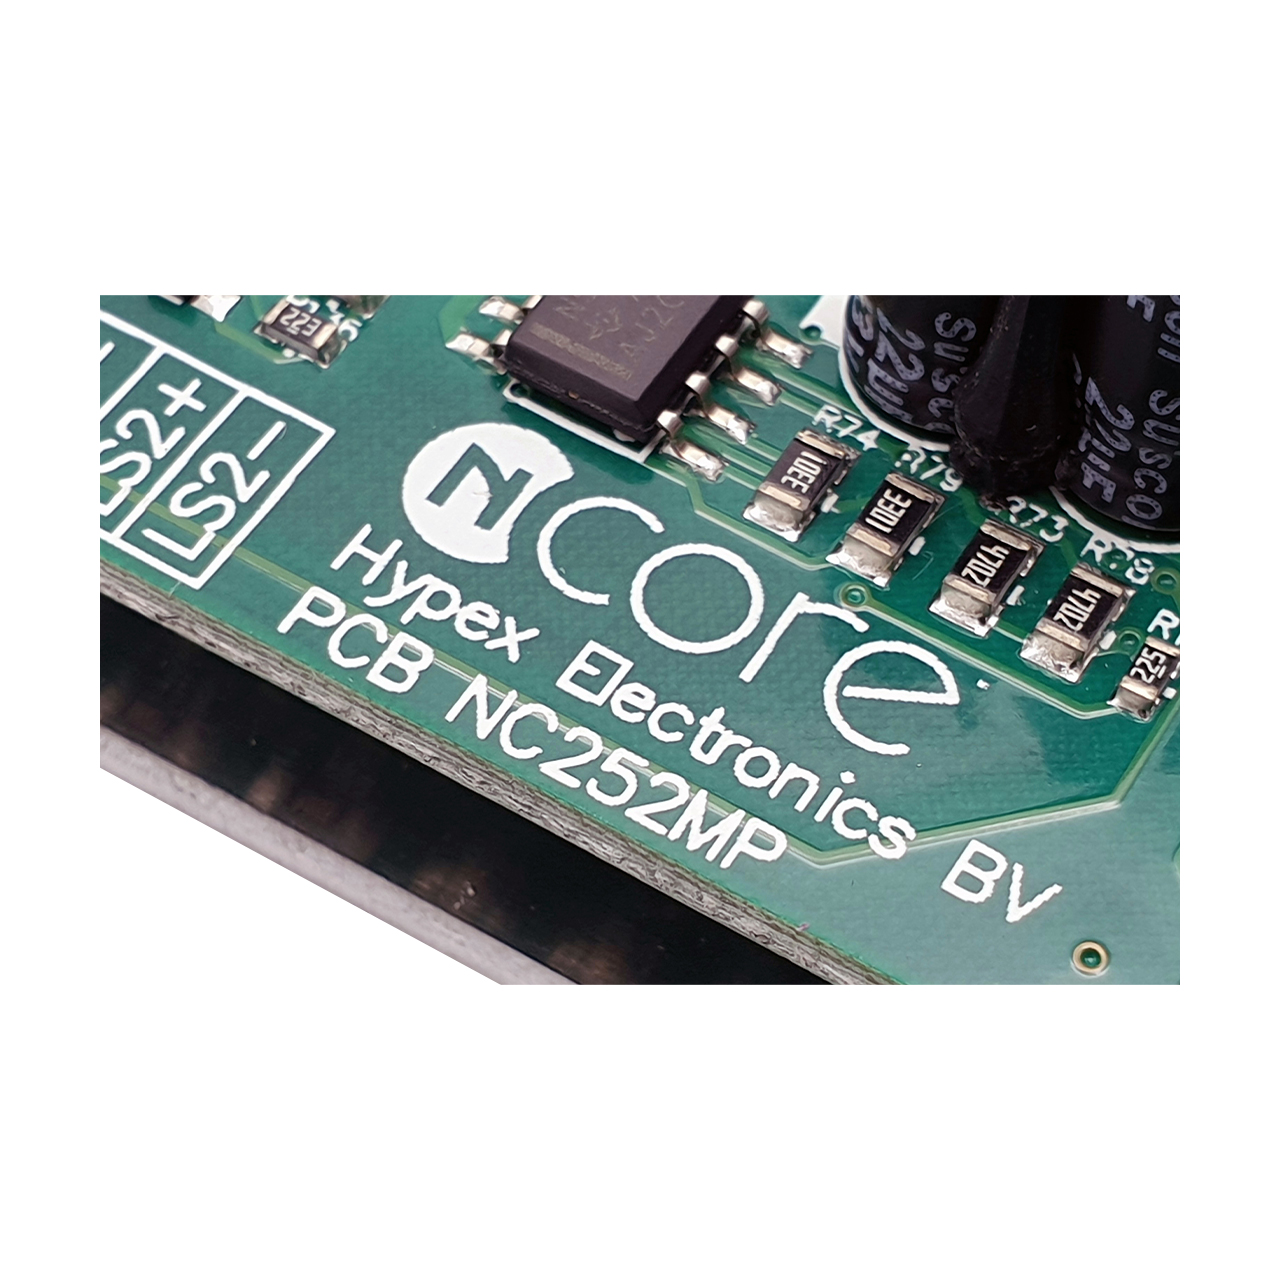 Hypex NC252MP OEM amplifier module